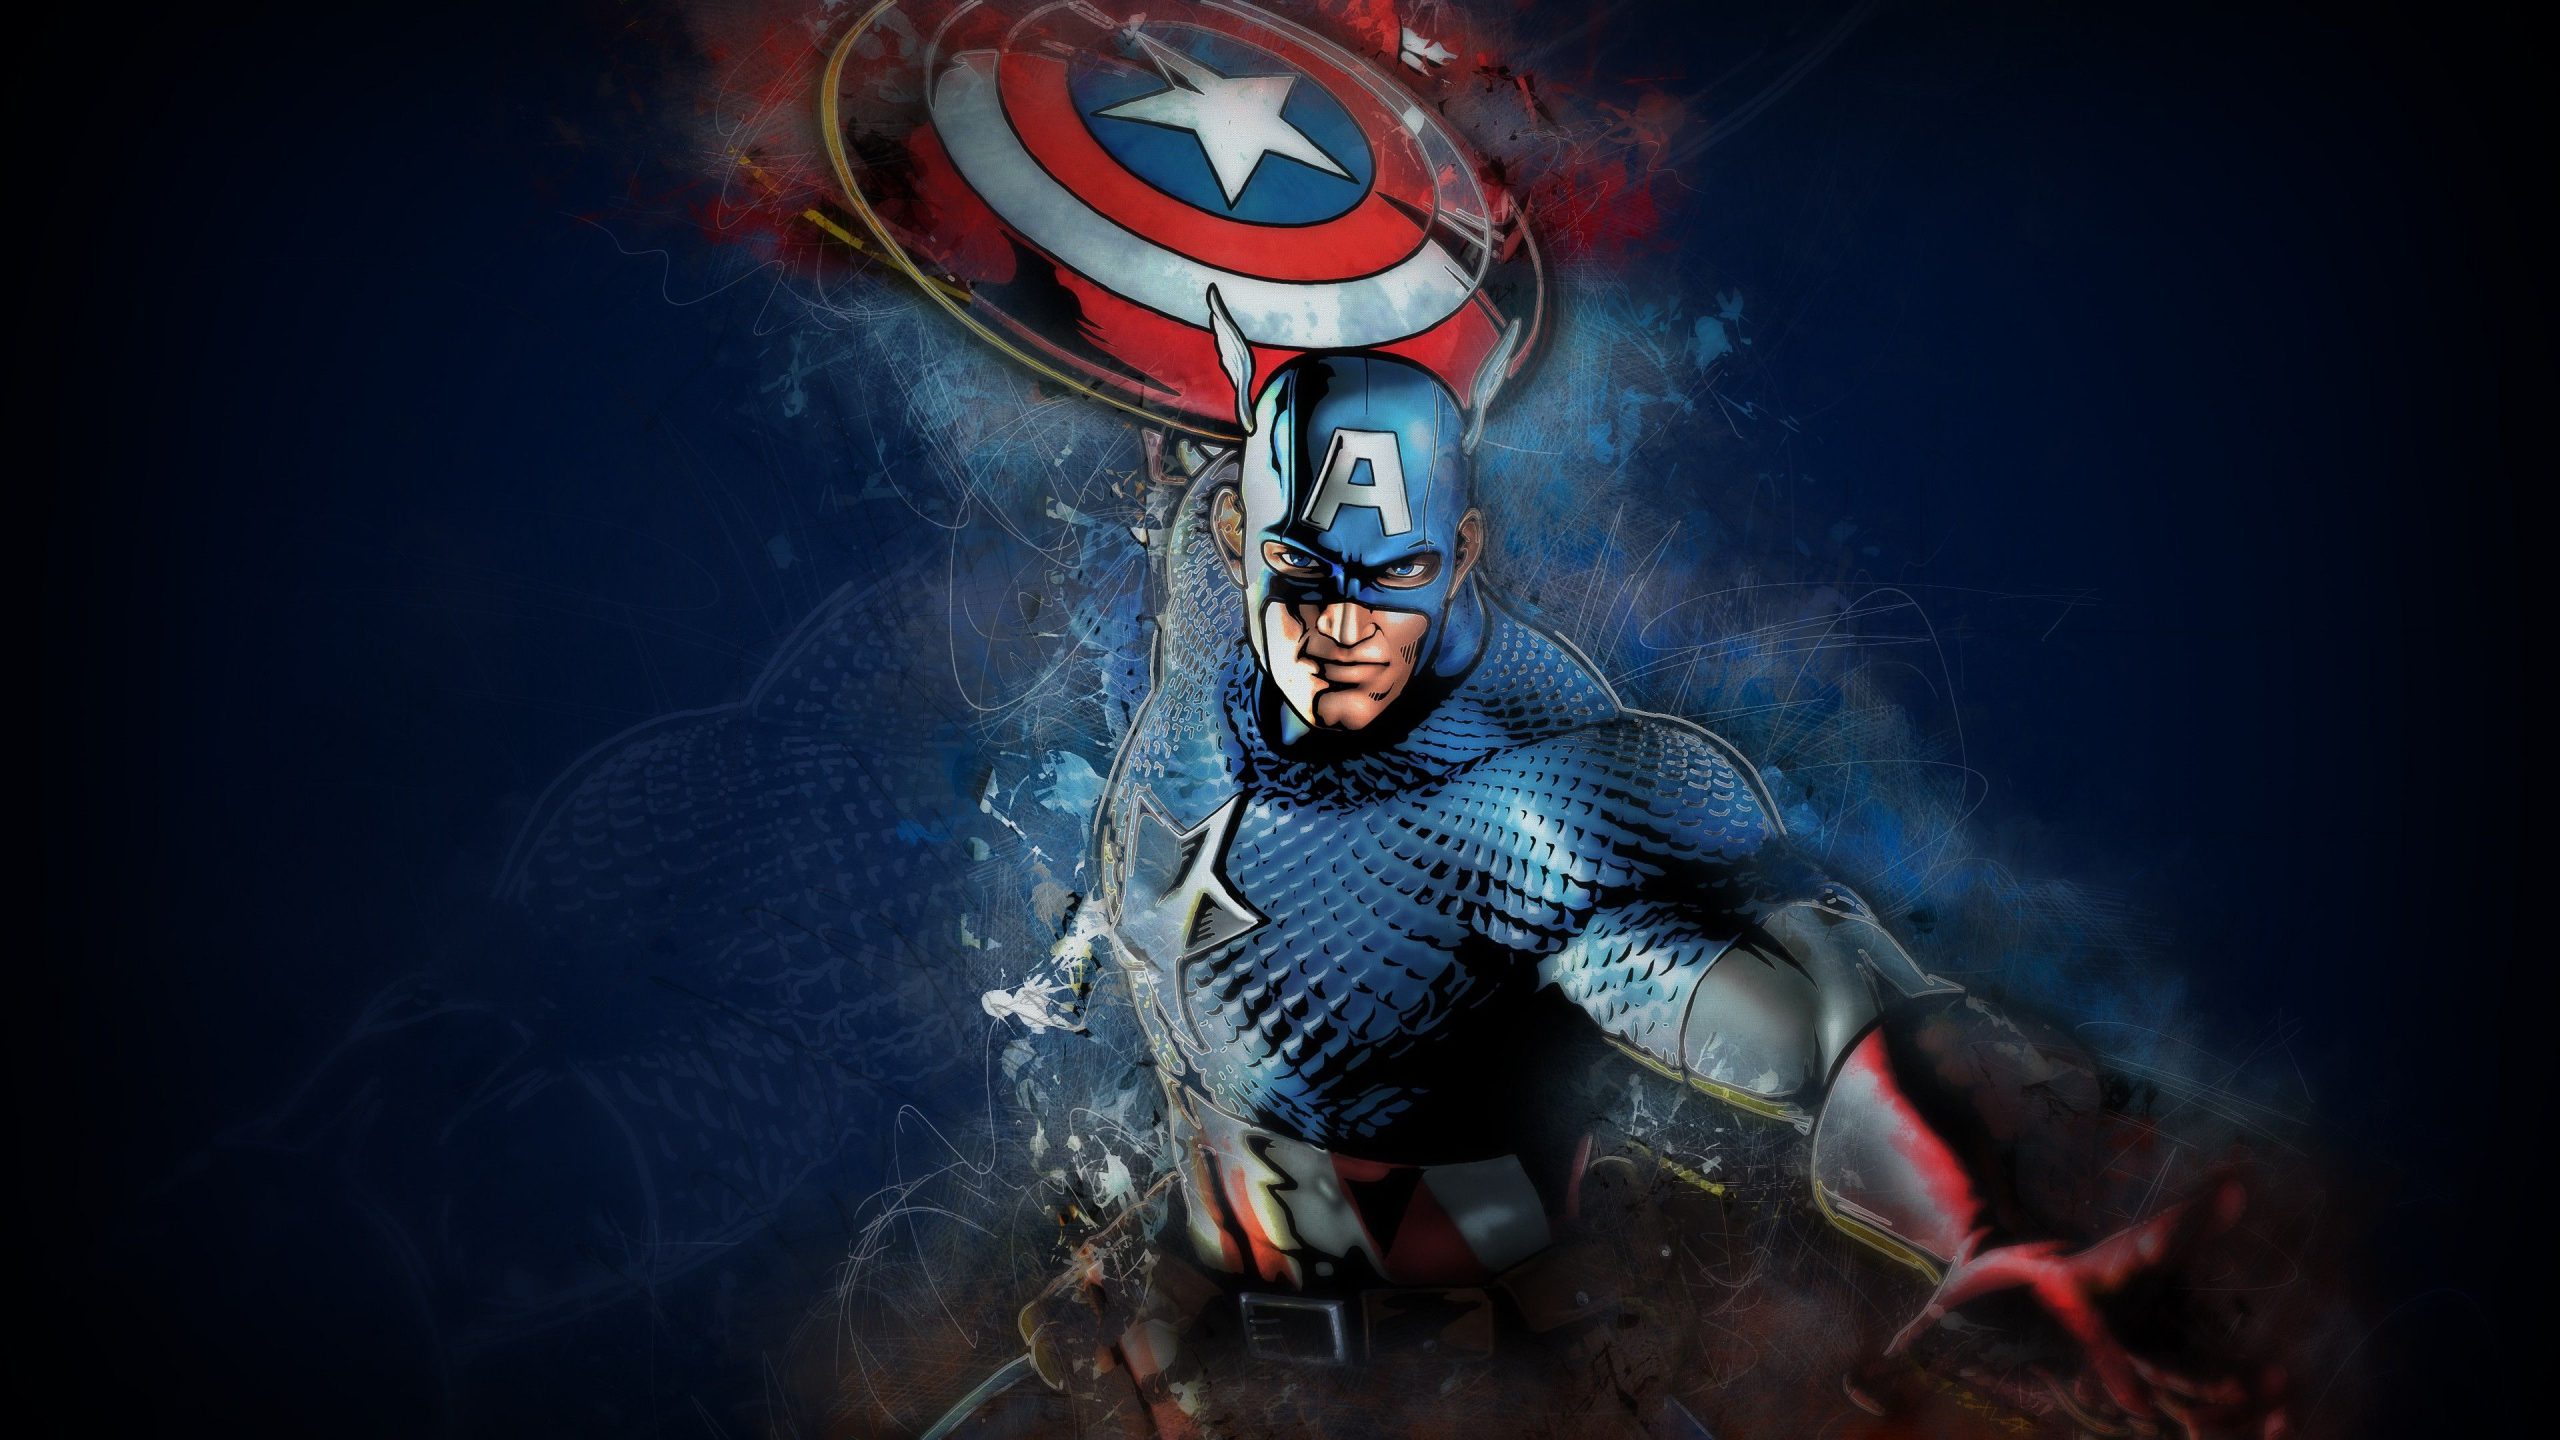 Imágenes y fondos de Avengers  Imagenes de capitan america, Capitán américa,  Avengers